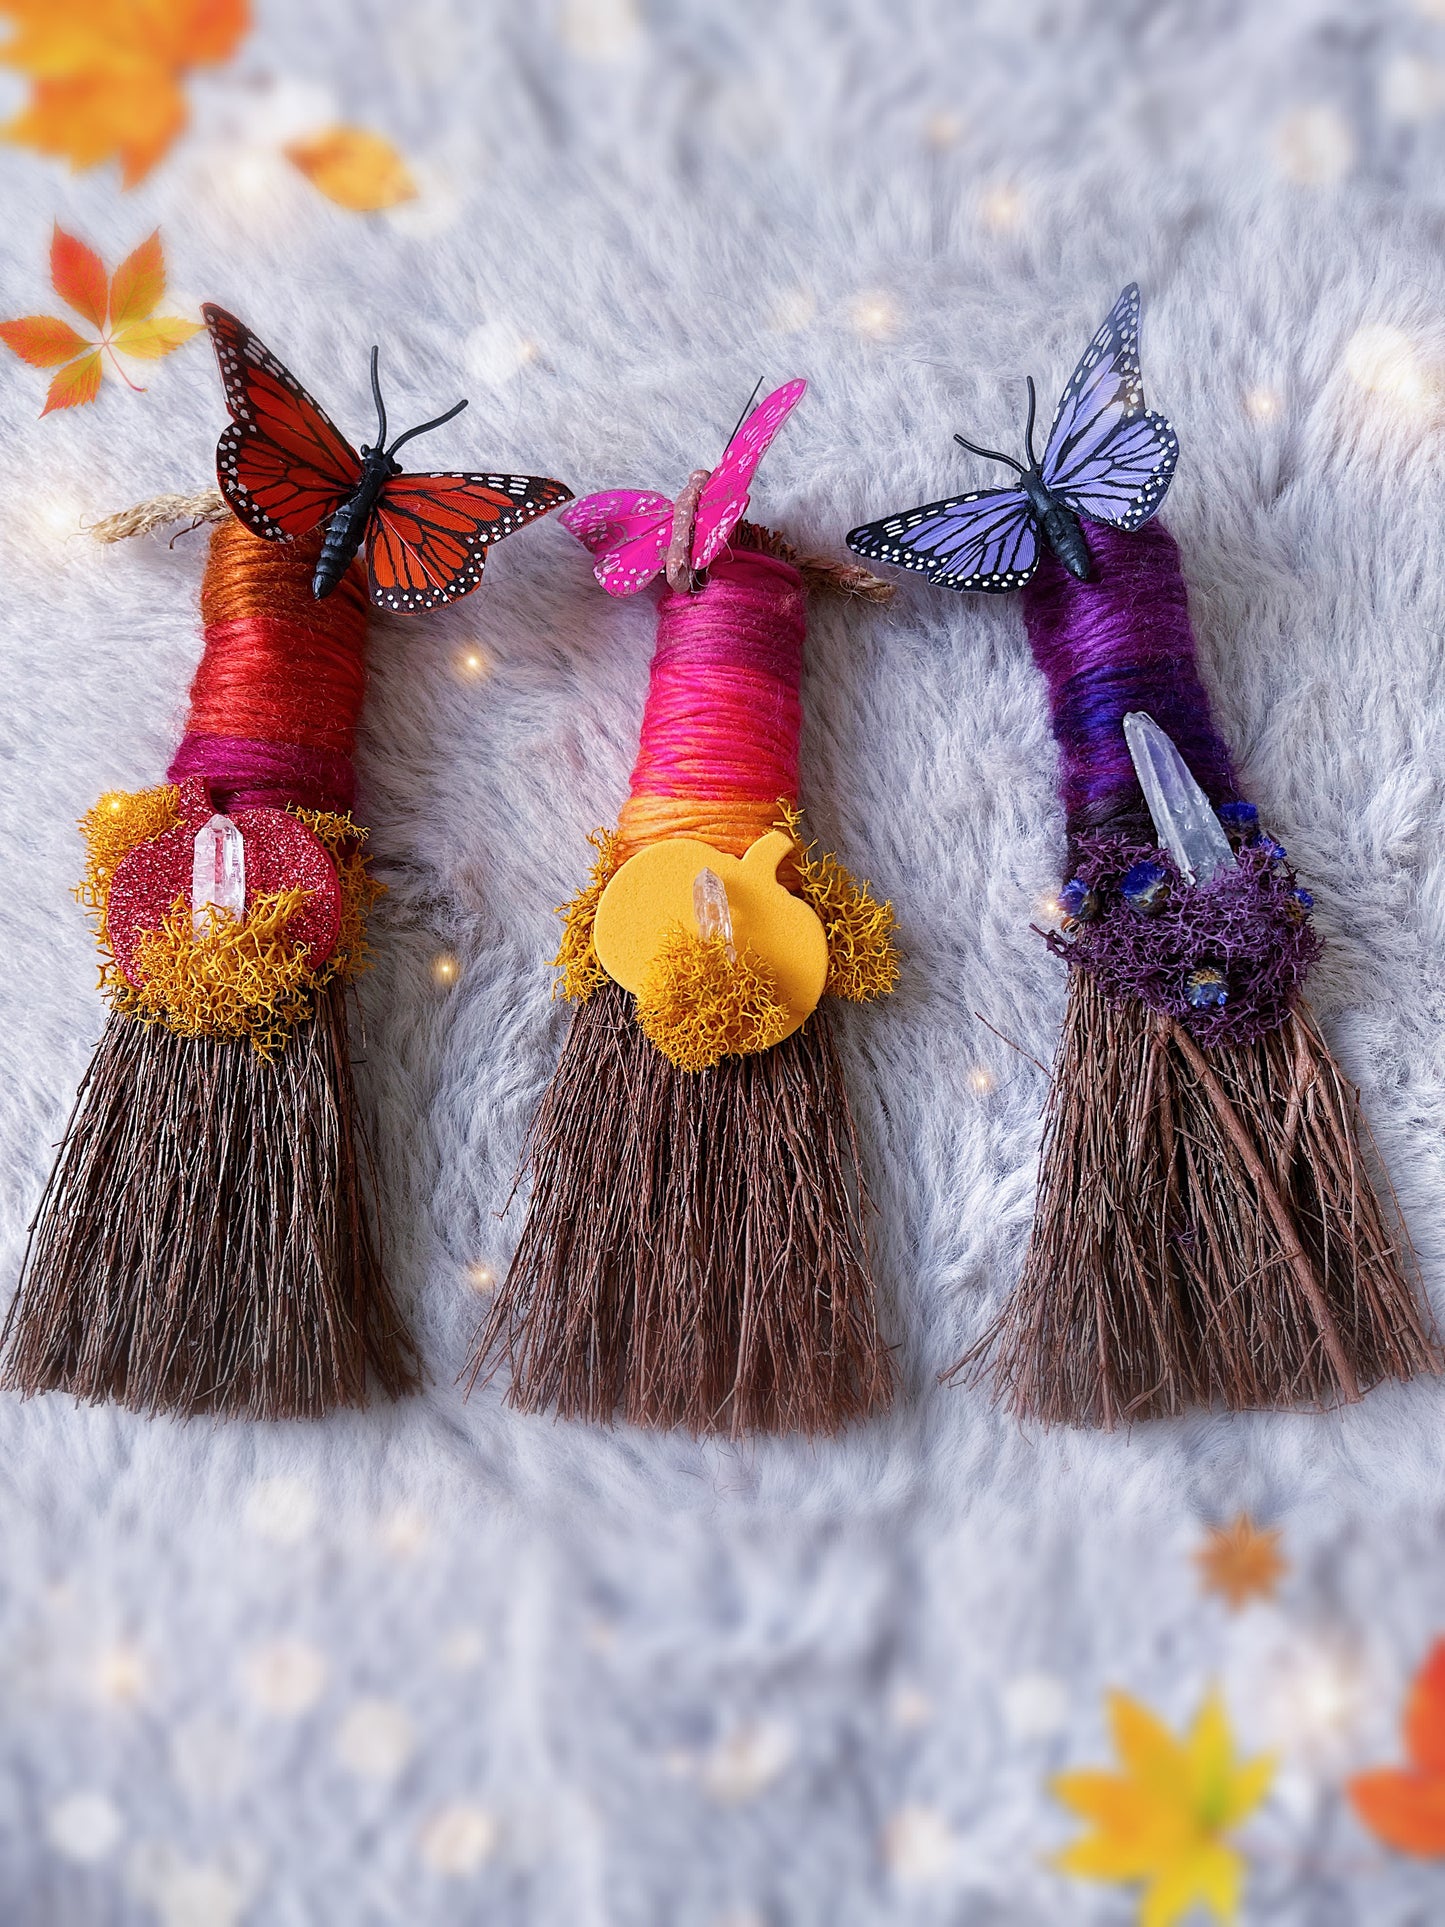 Vibrant Autumn Cinnamon Besom | Broom | Home Decor